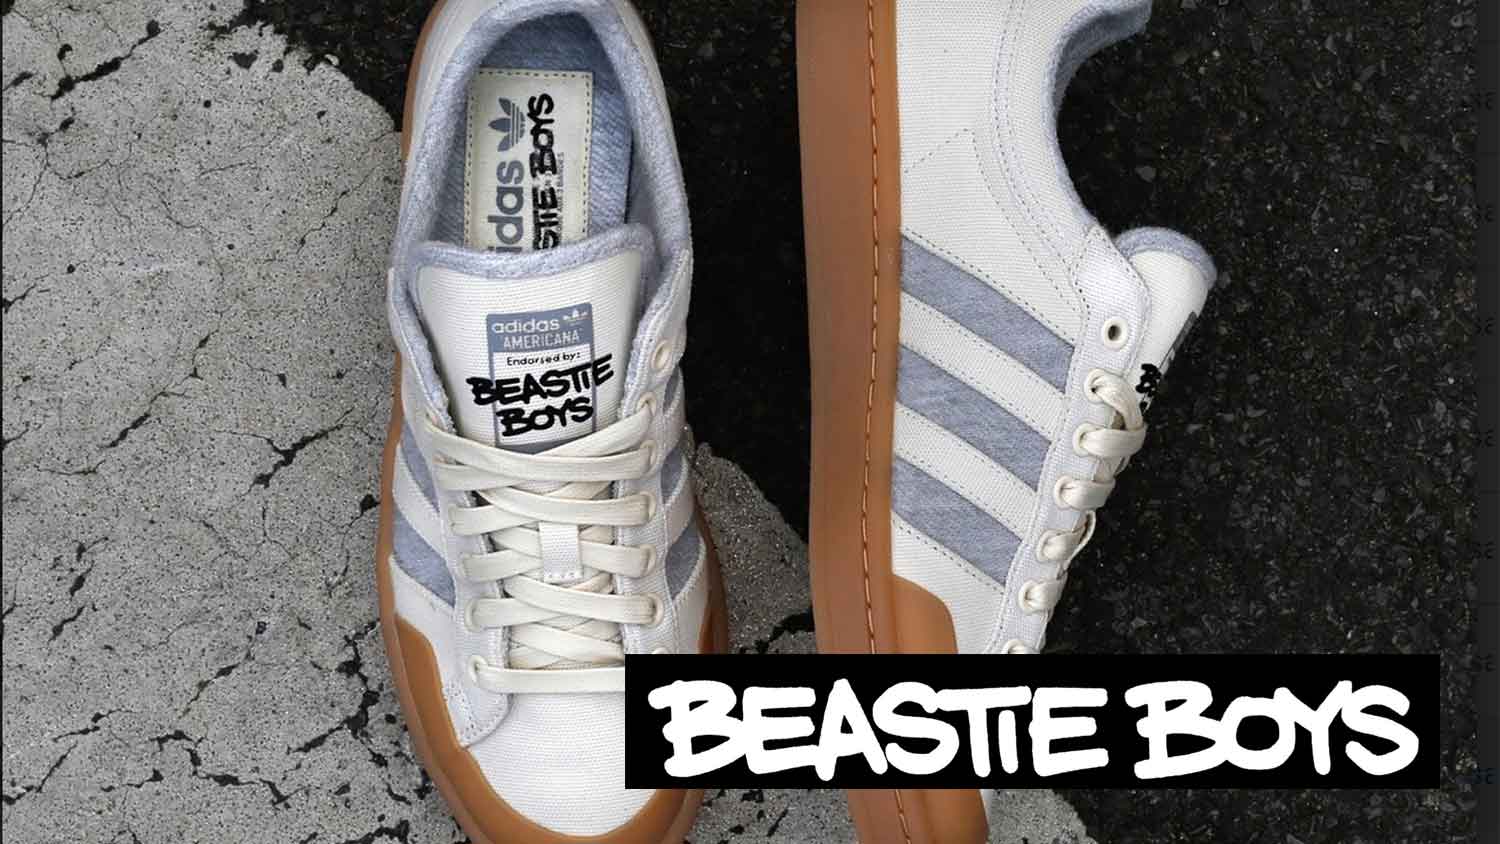 Adidas Just Launched Vegan Beastie Boys 